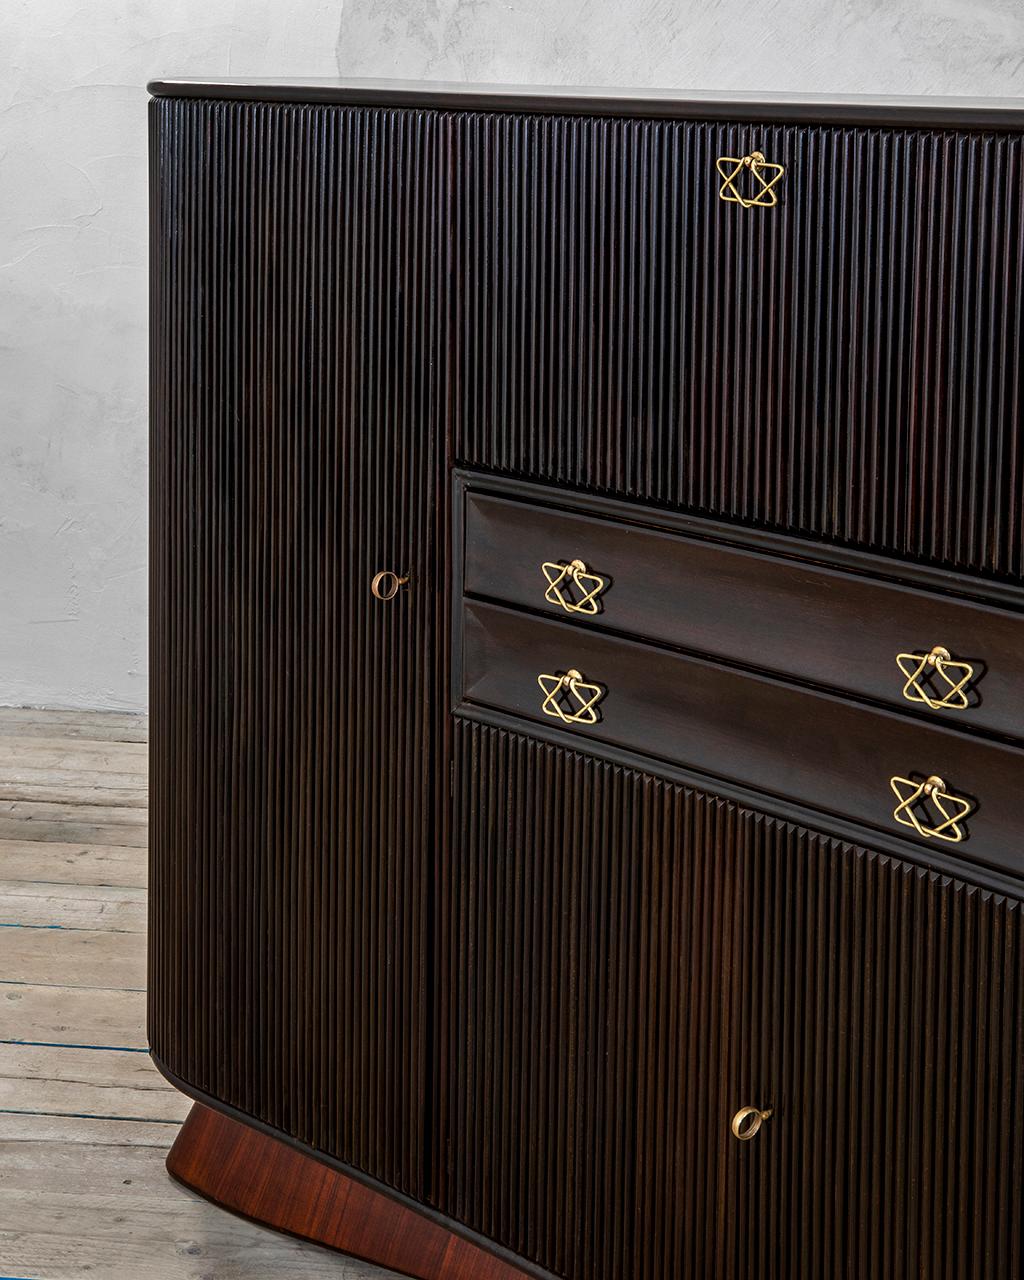 Mid-Century Modern 20th Century Osvaldo Borsani Large Cabinet in Dark Wood and Brass Handles '40s